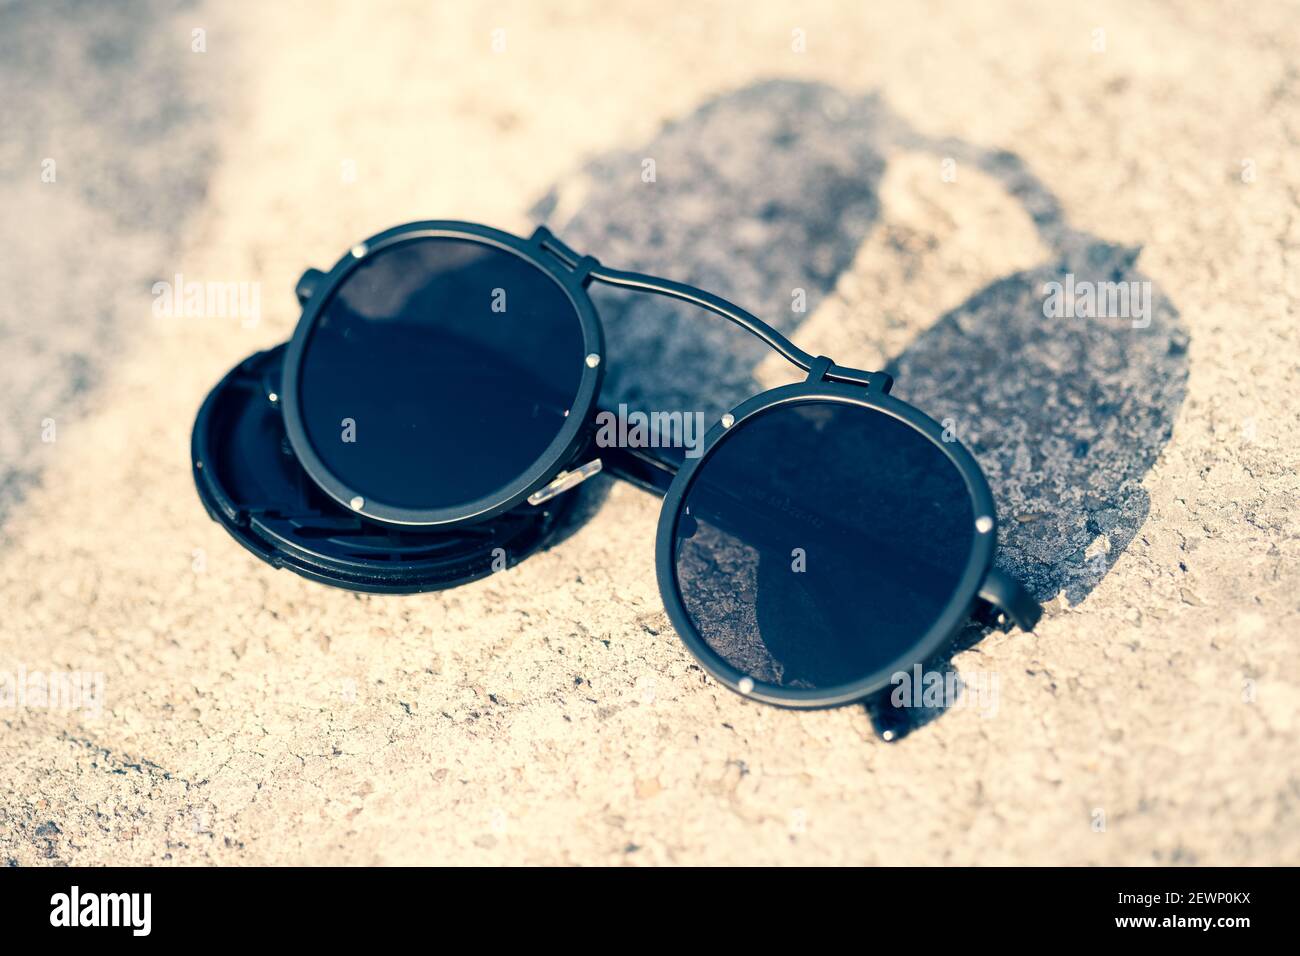 Gafas Steampunk con lentes redondas grandes en un día soleado closeup. Enfoque selectivo Fotografía de stock - Alamy